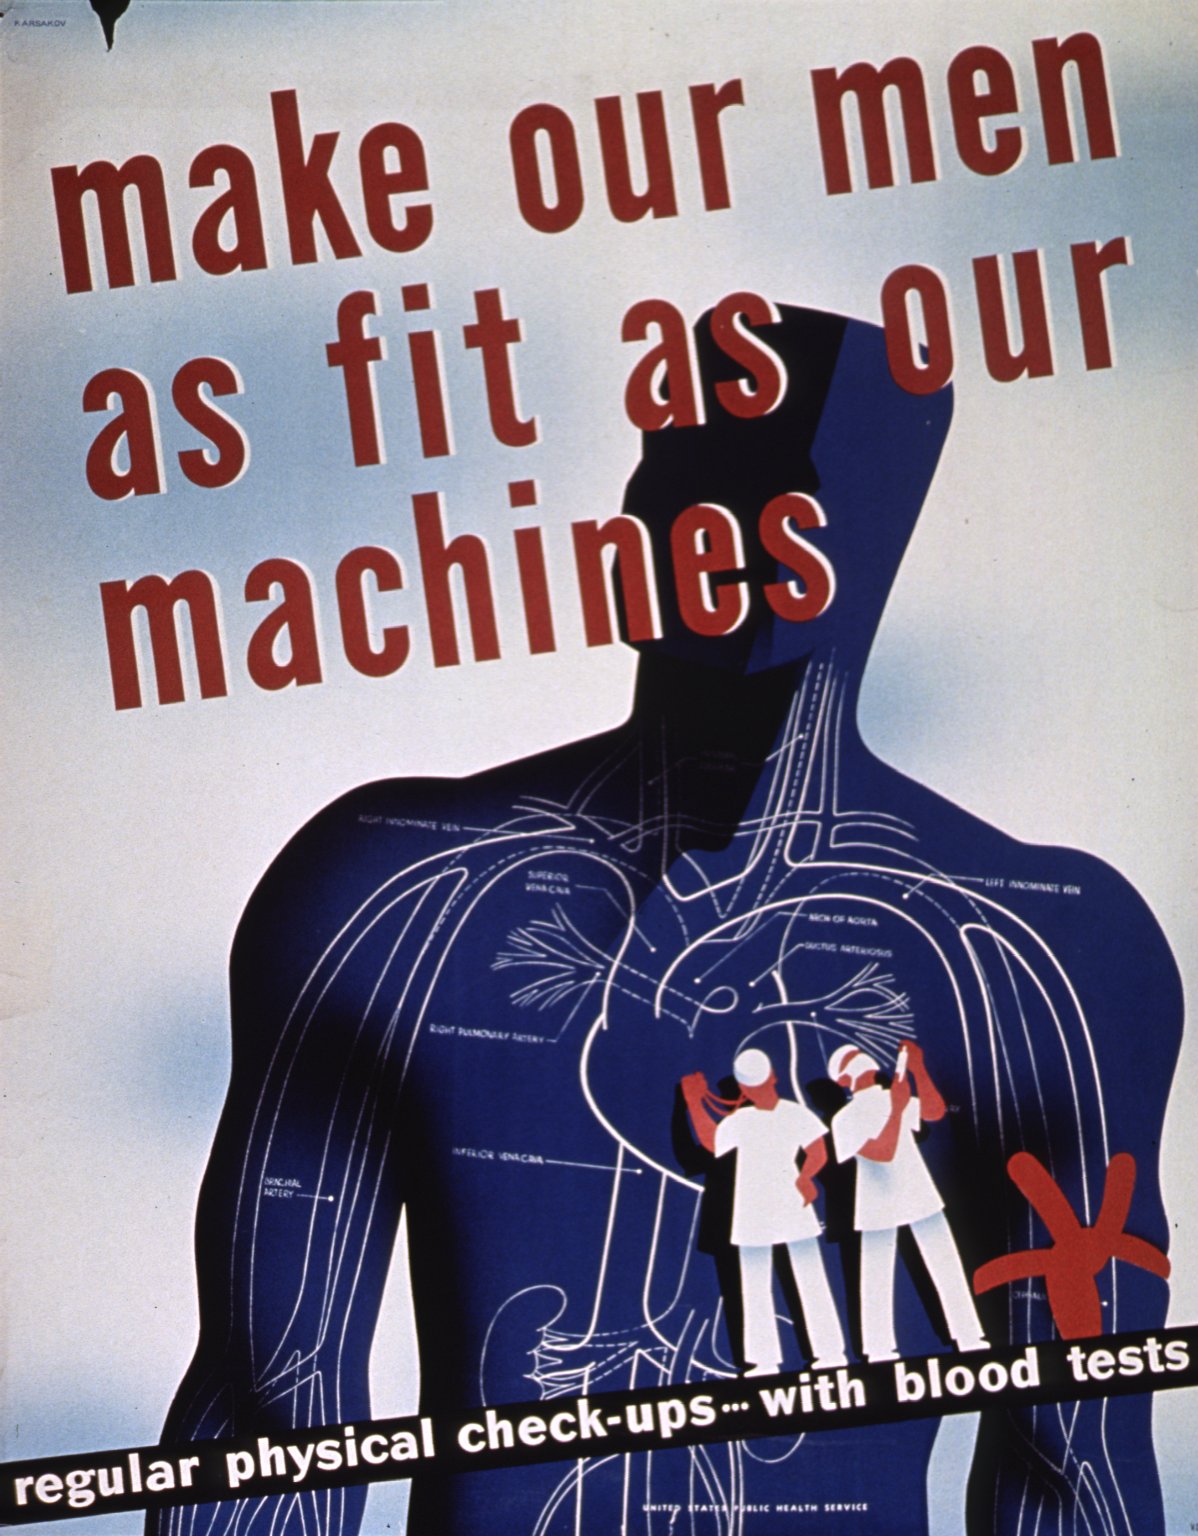 Venereal disease campaign poster U.S. Public Health Service, ca. 1945. Artist: Leonard Karsakov.